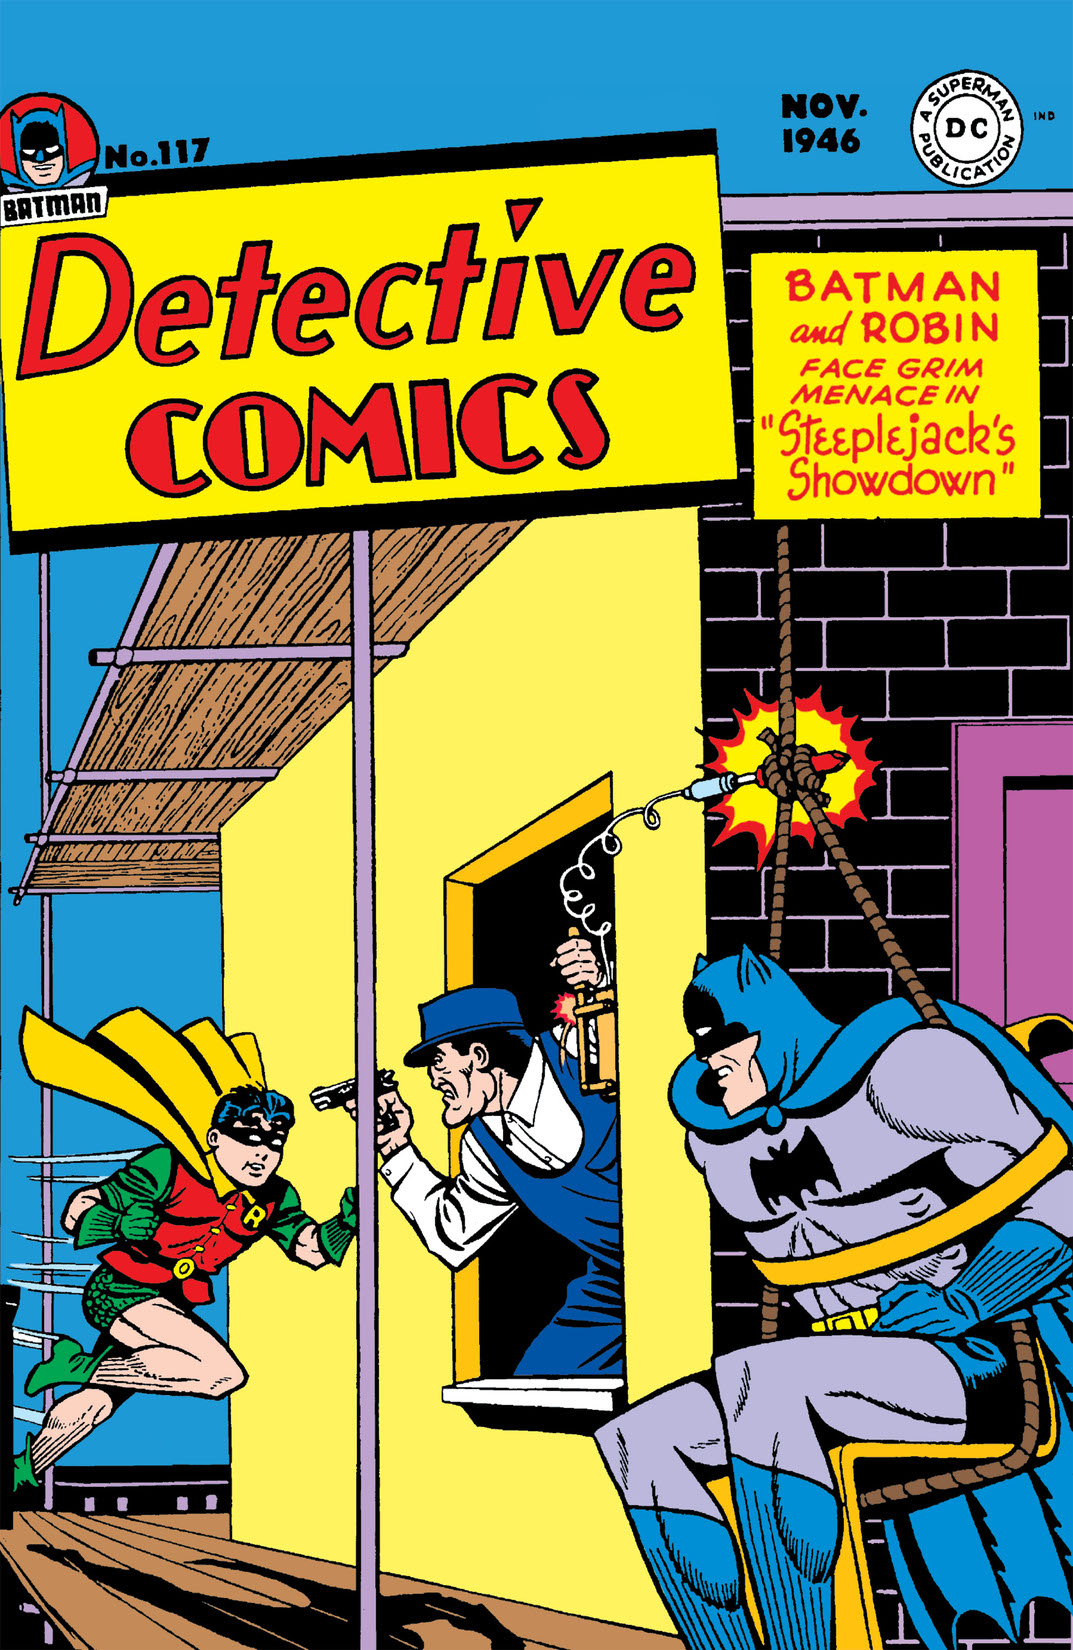 Detective Comics (1937-) #117 preview images